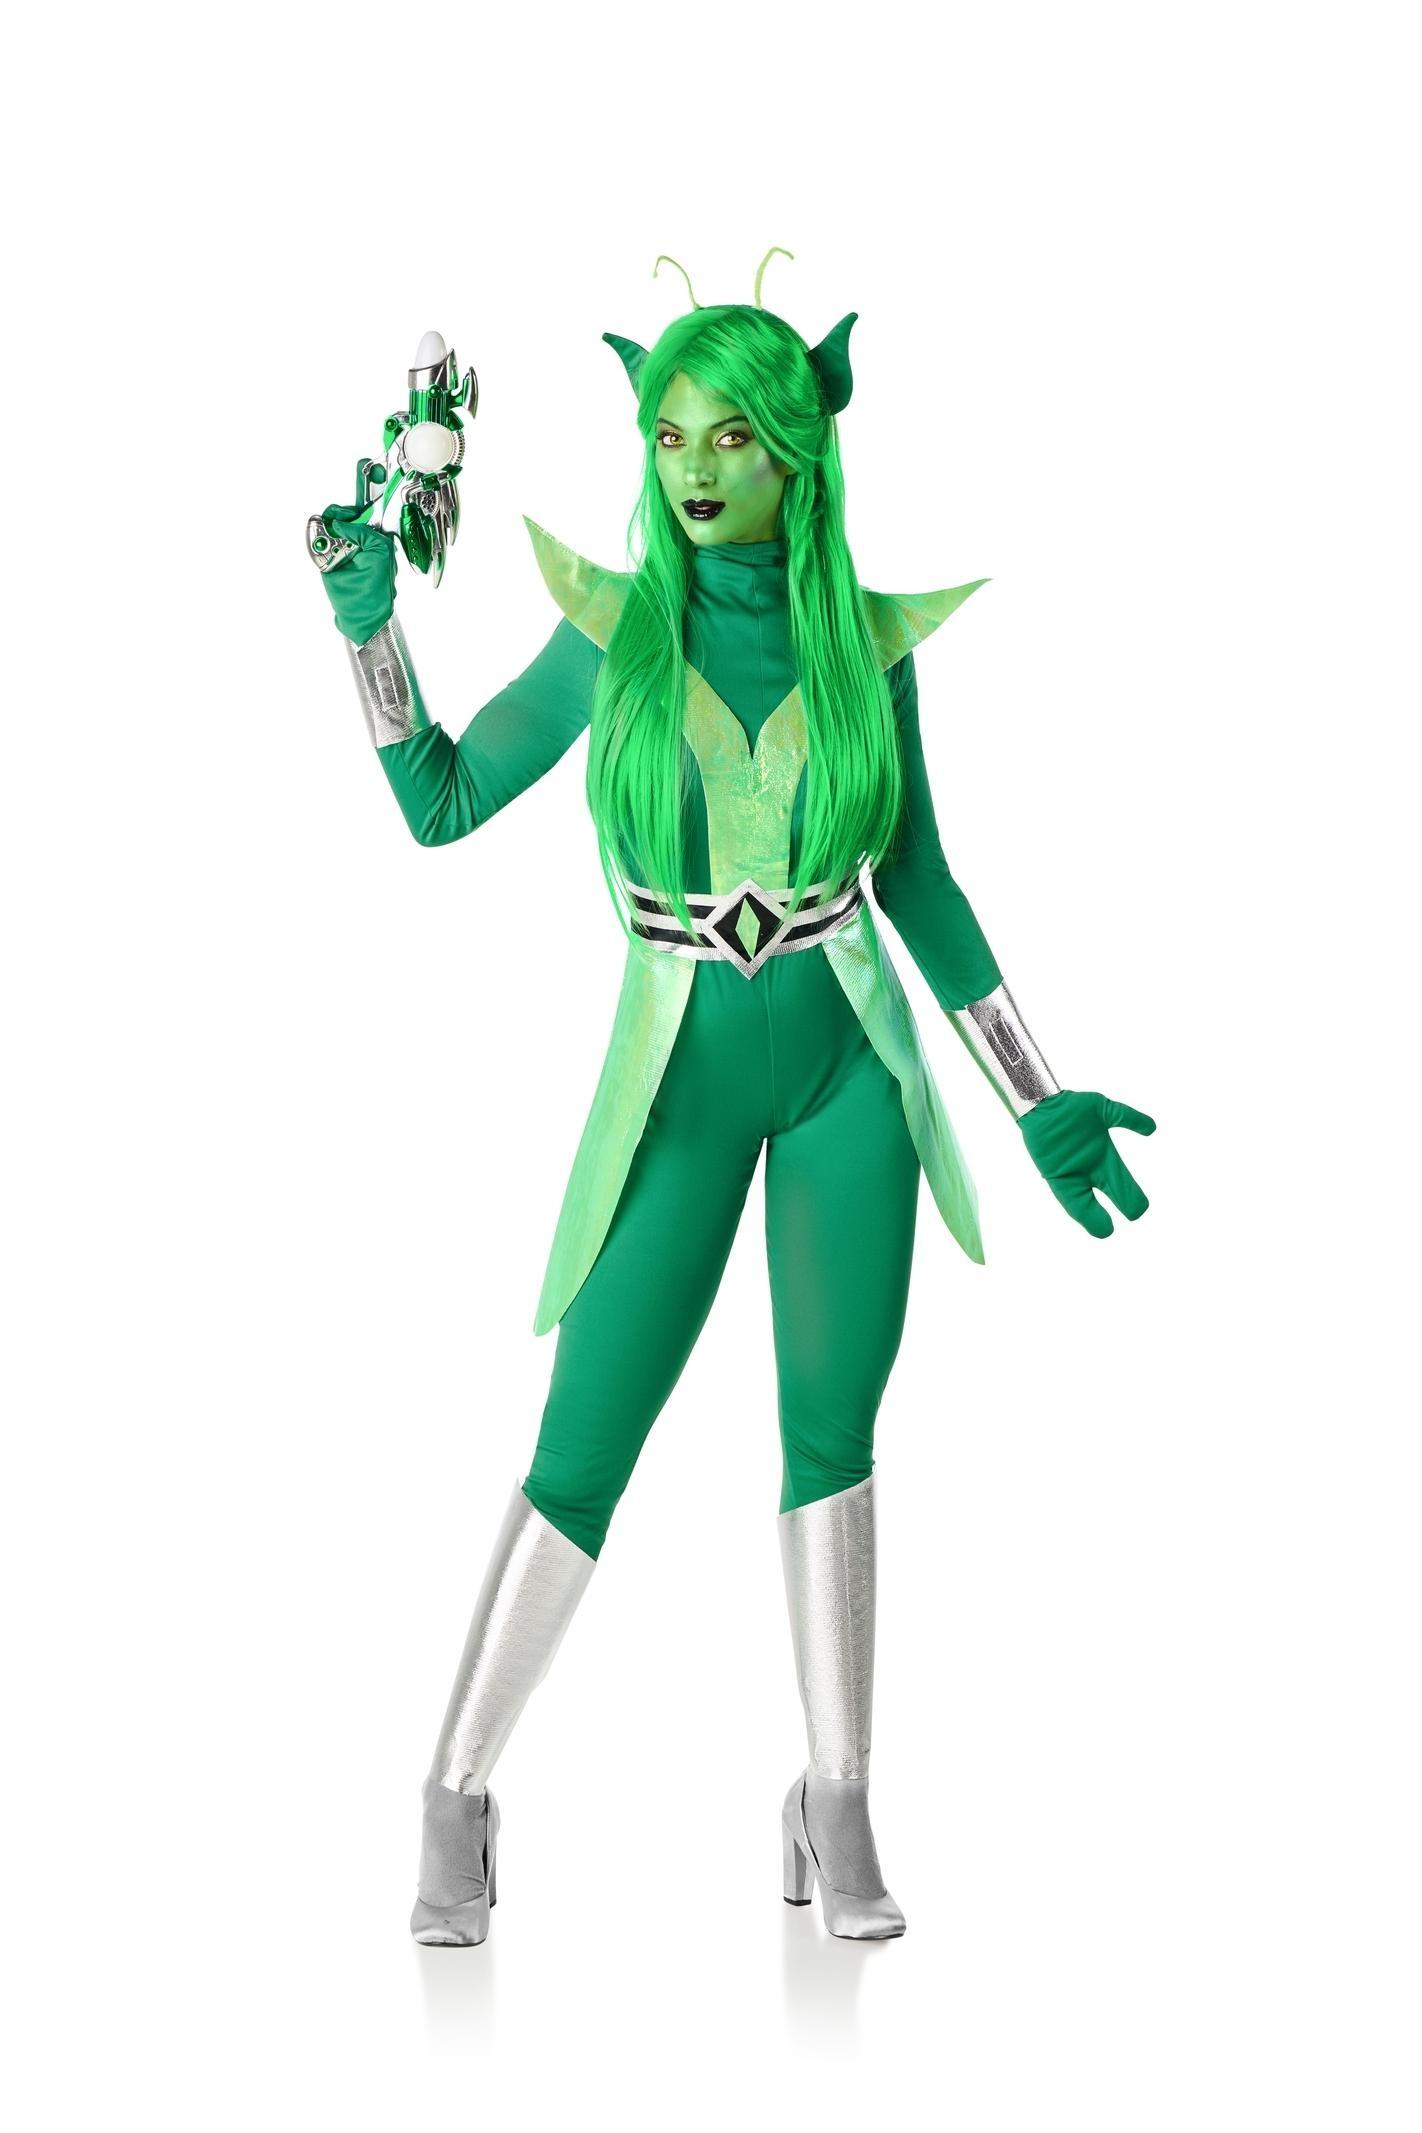 Disfraz Alien verde infantil